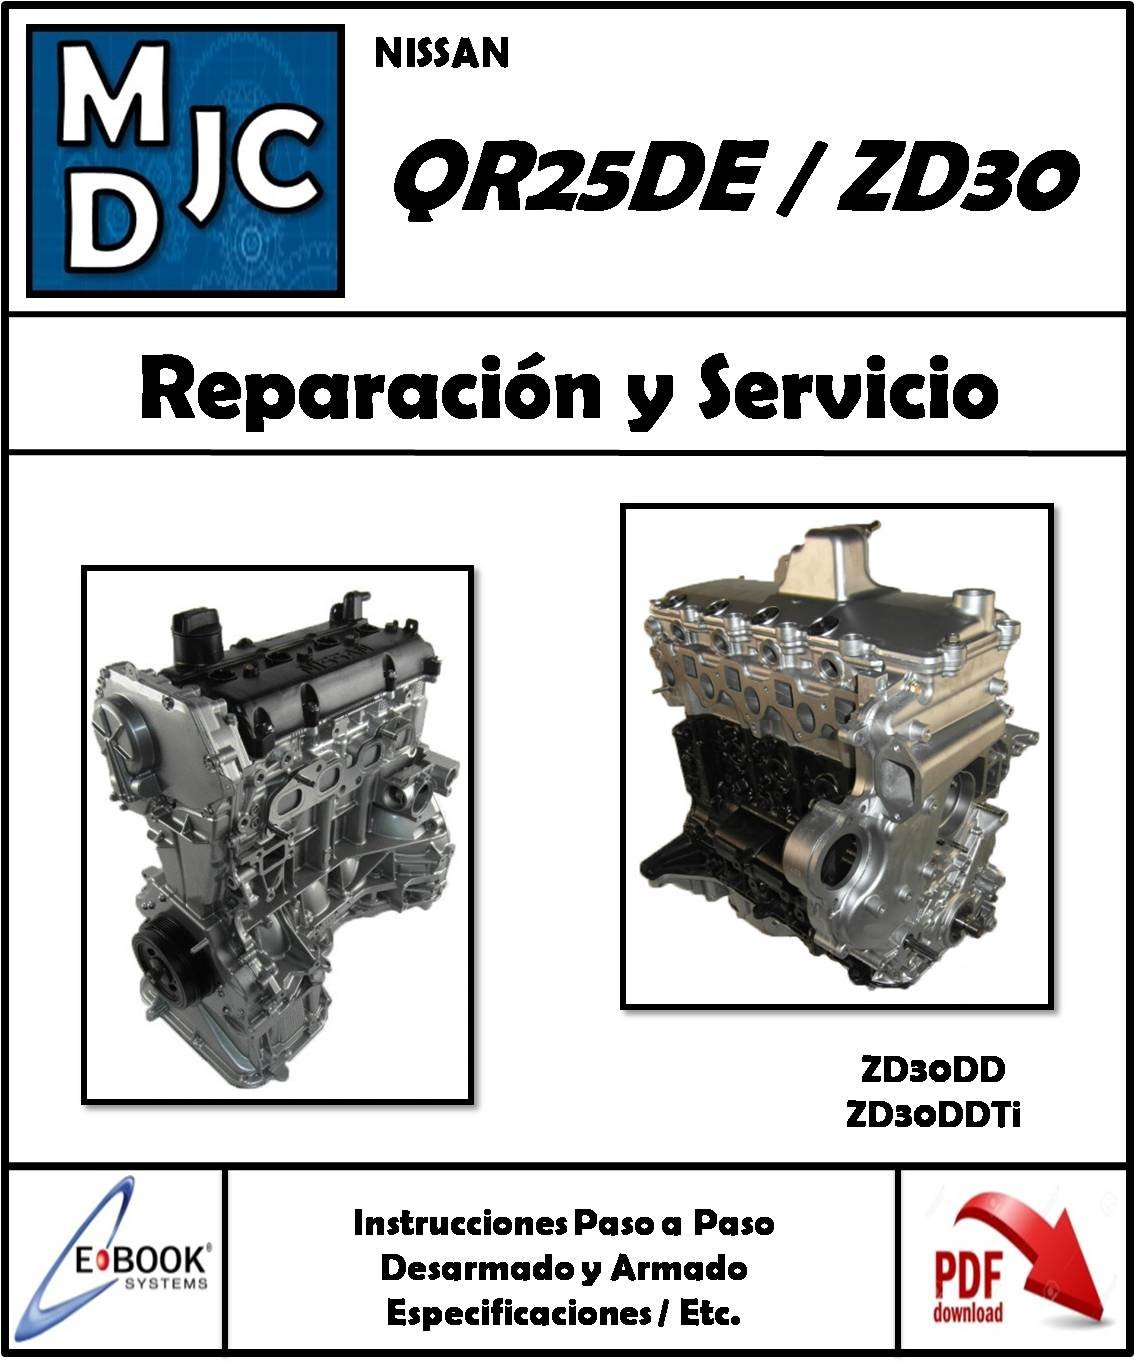 Nissan QR25DE // ZD30